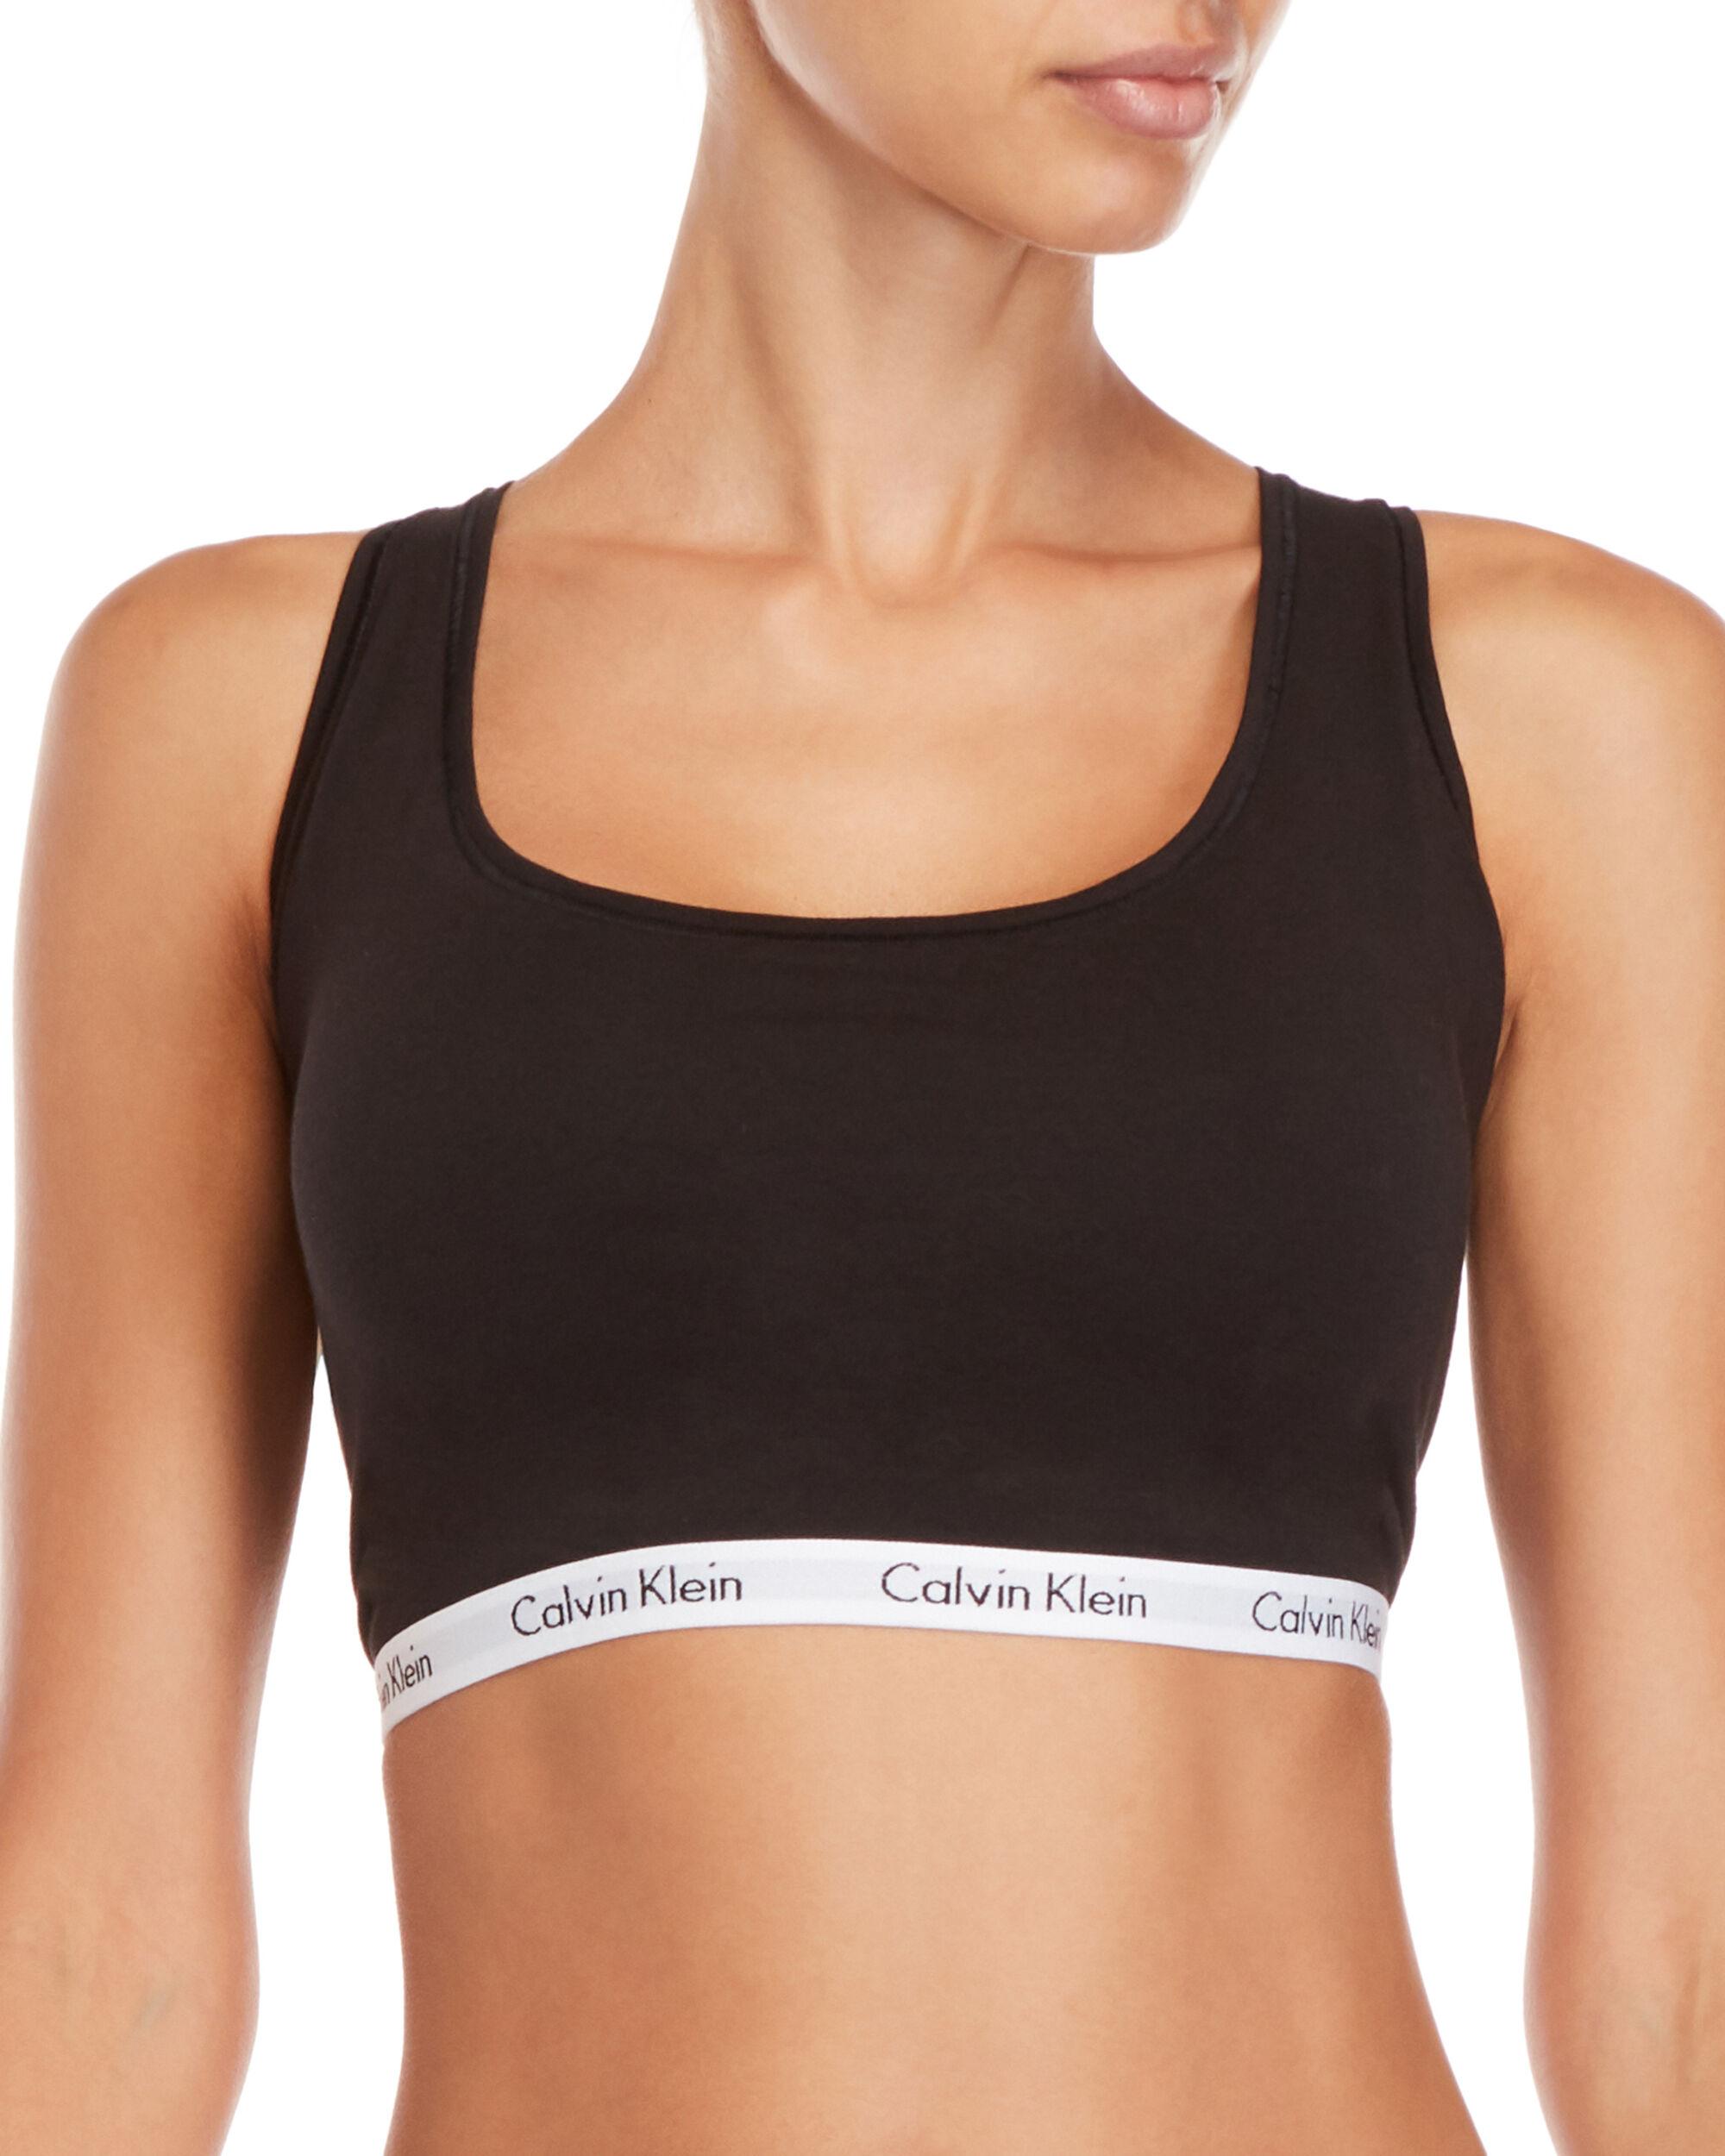 Calvin Klein Modern Cotton Plus Size Unlined Bralette in Black - Save